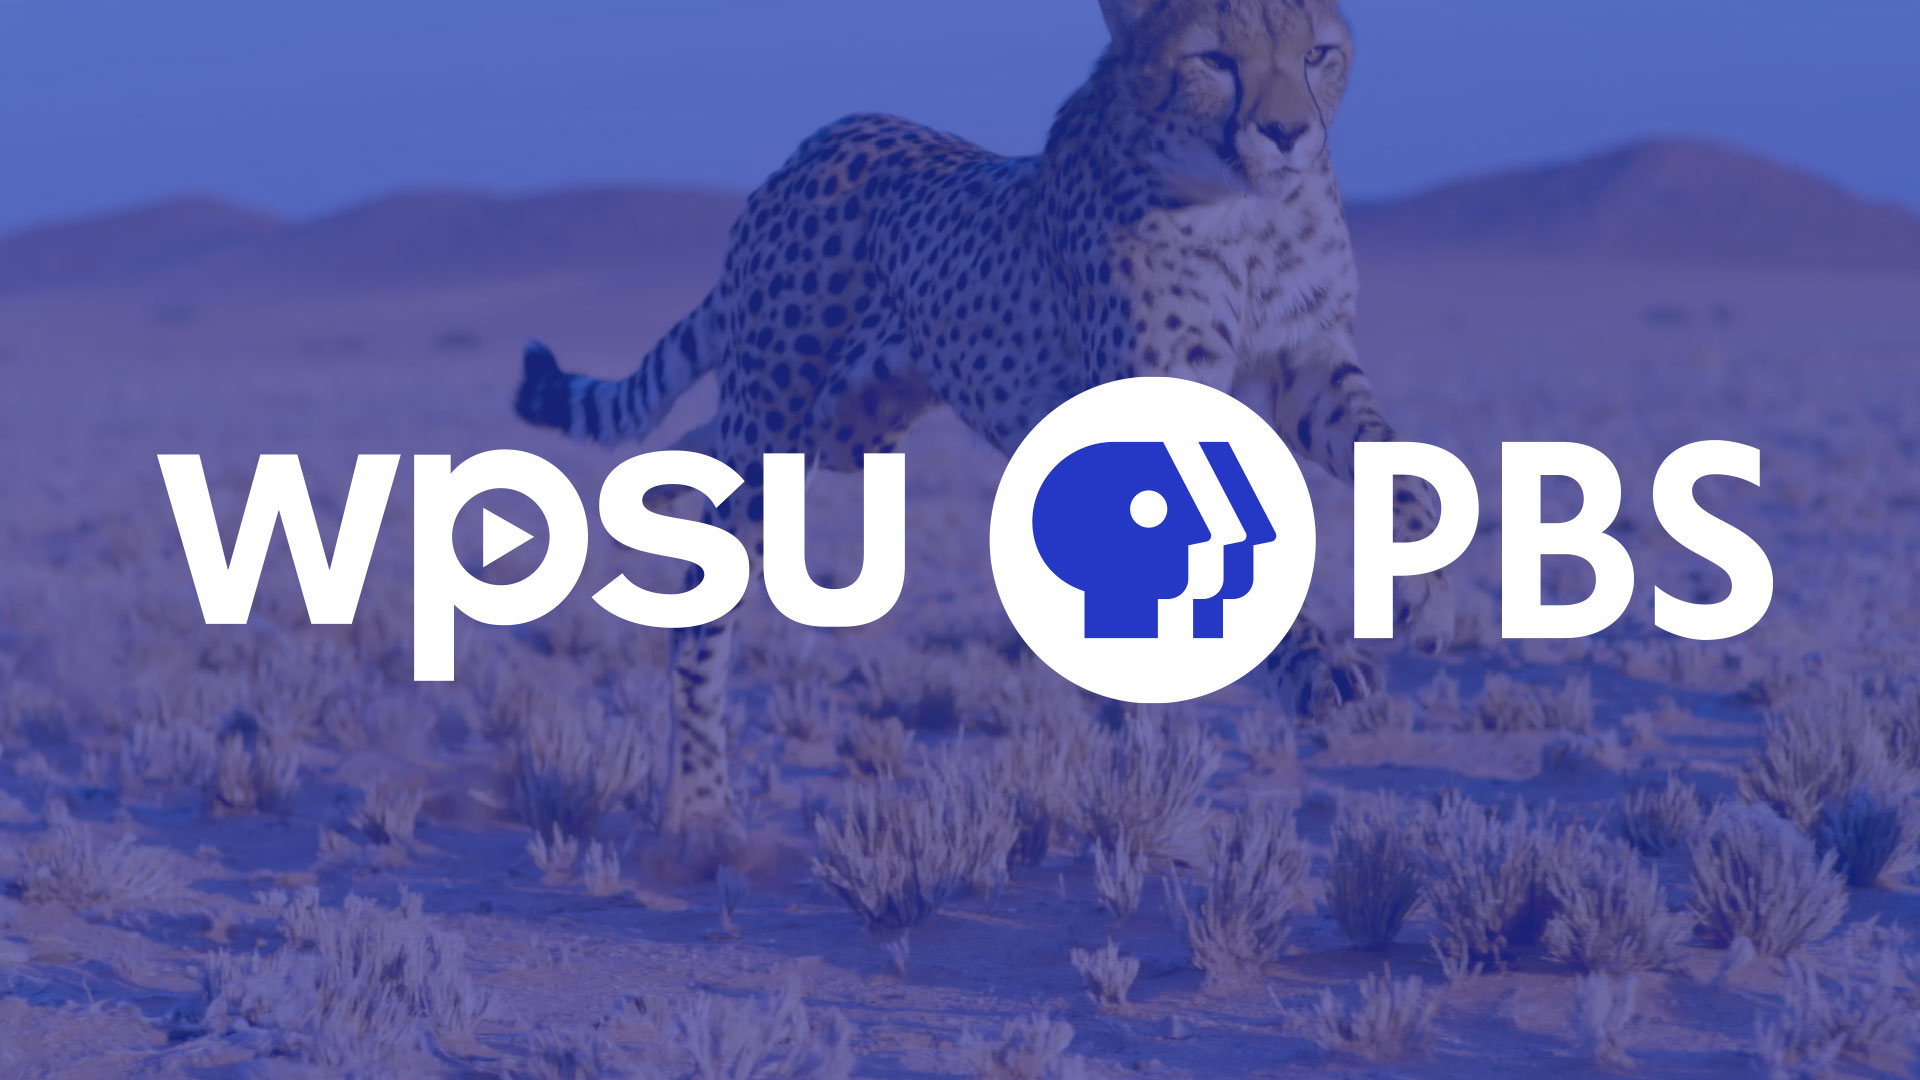 WPSU and PBS logos